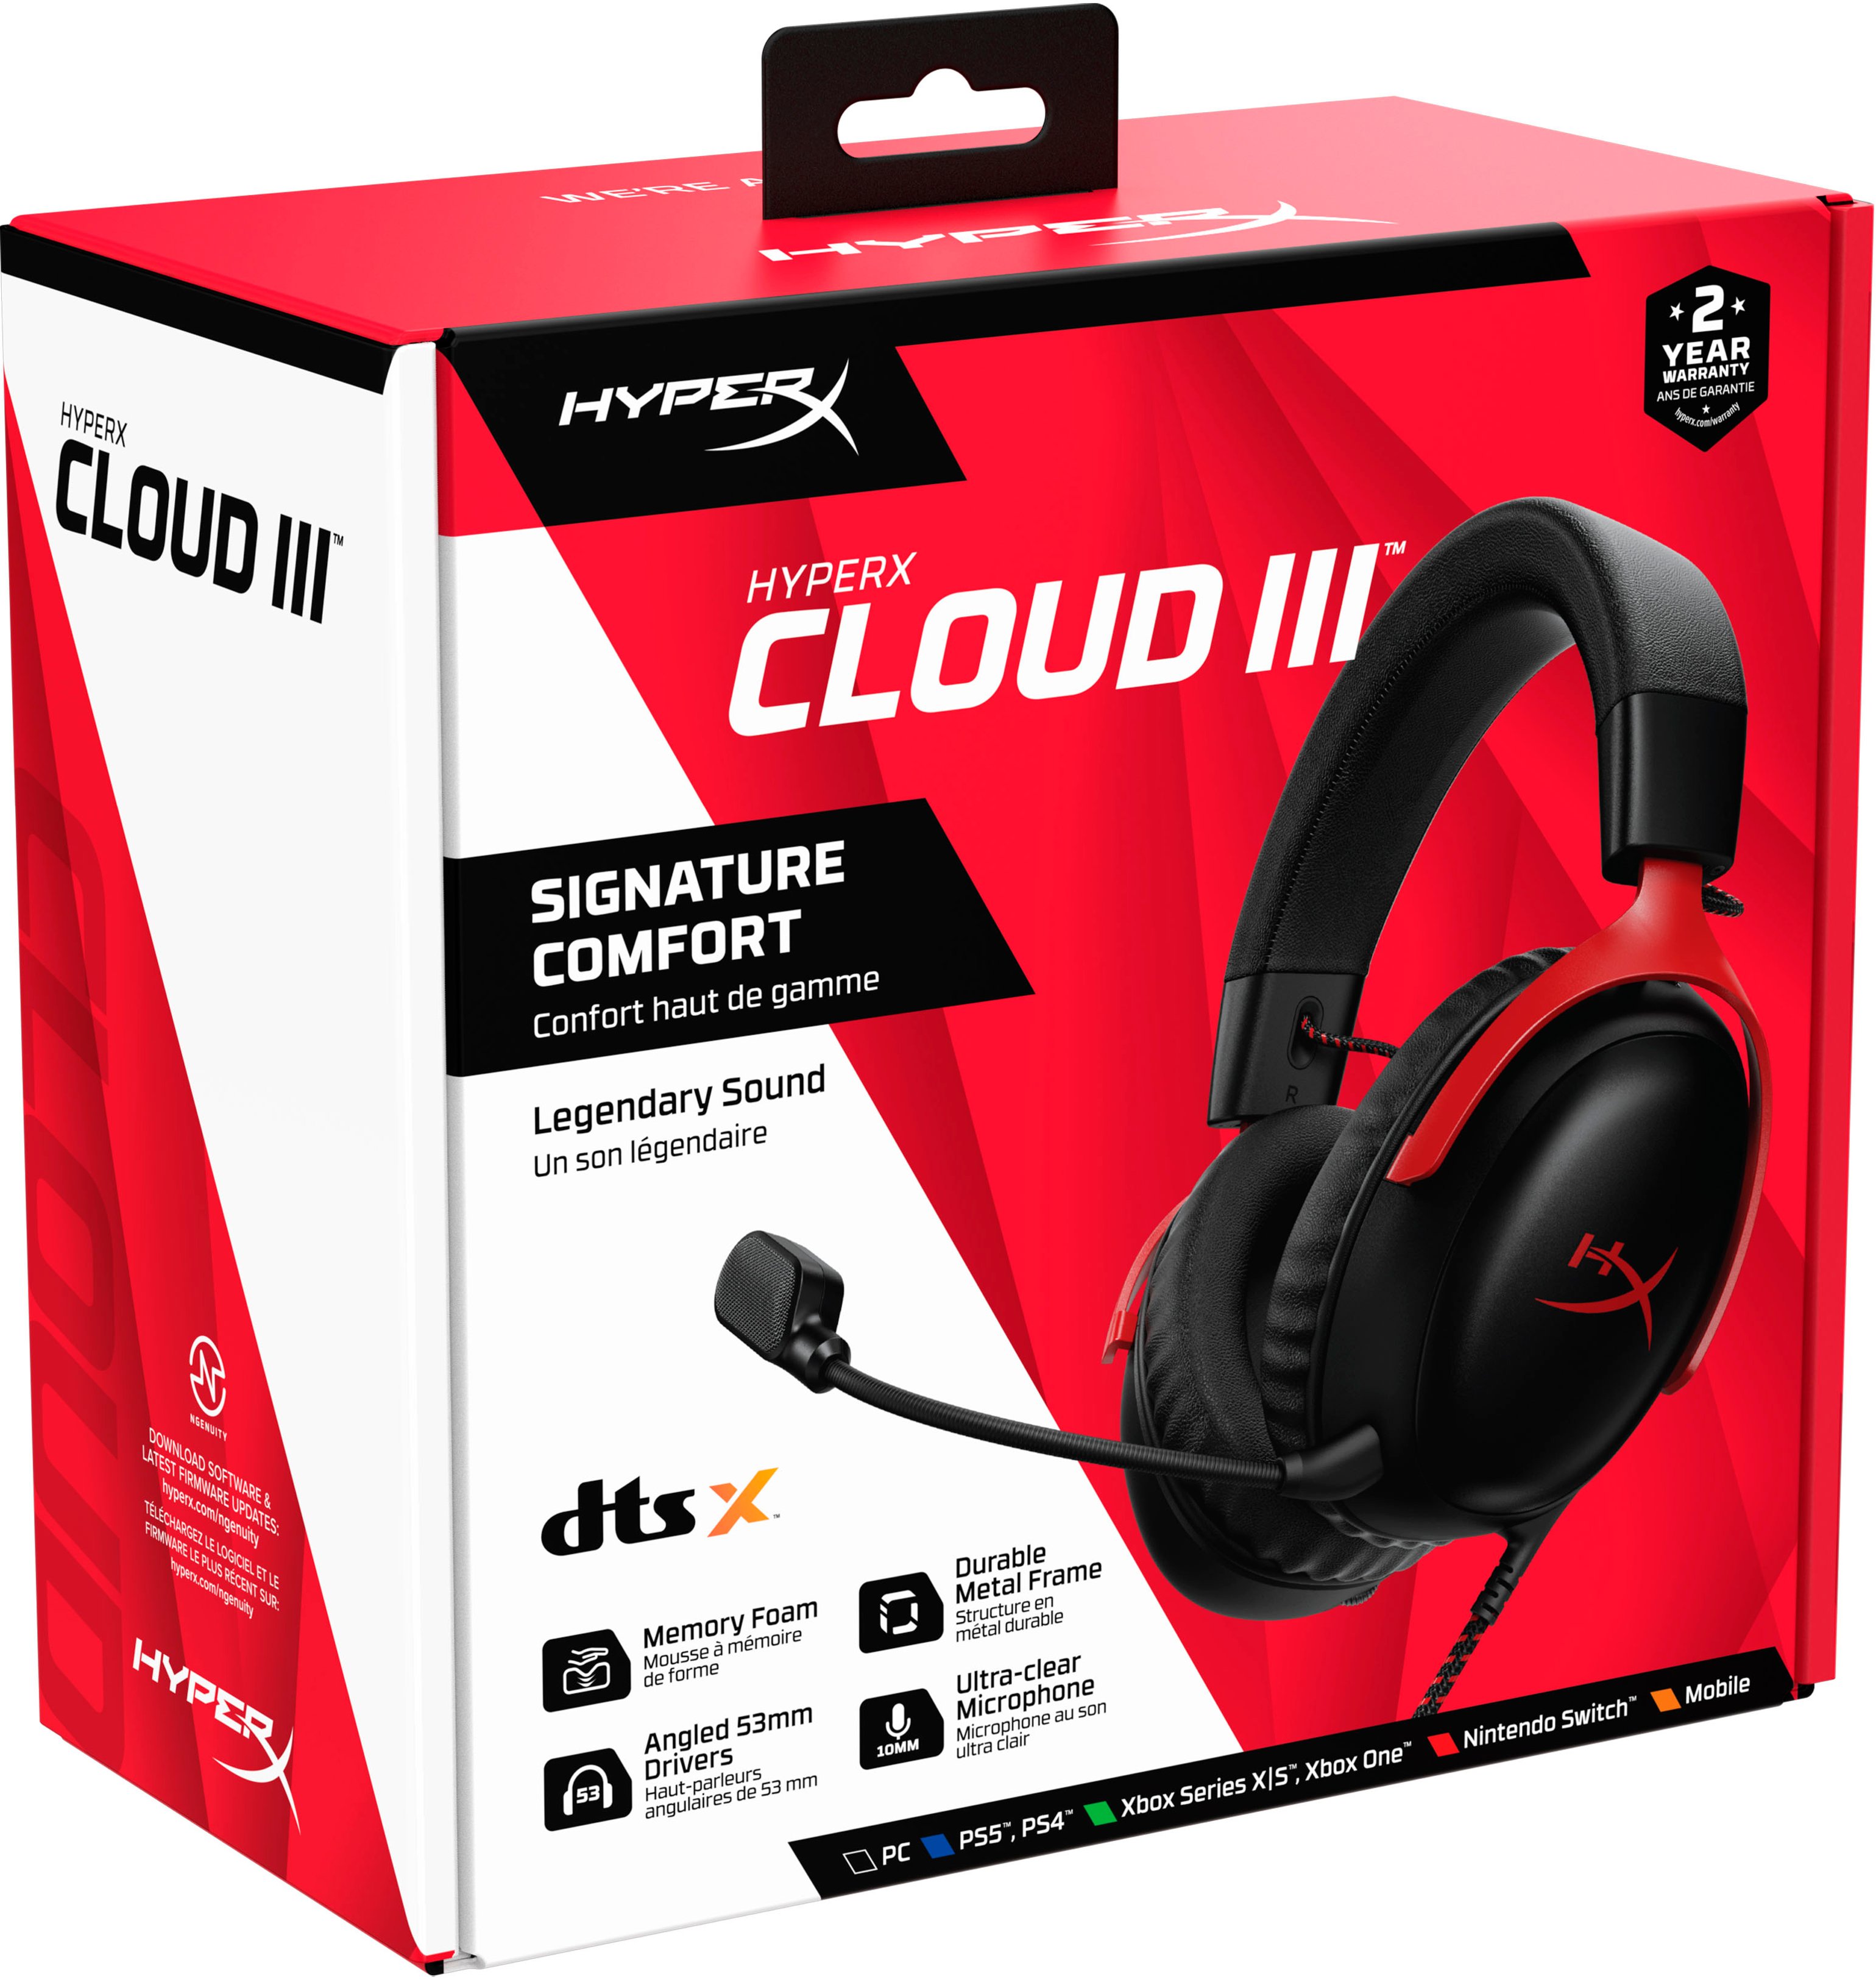 HyperX Cloud 3 Gaming Headset review: Light as a cloud, loud as a